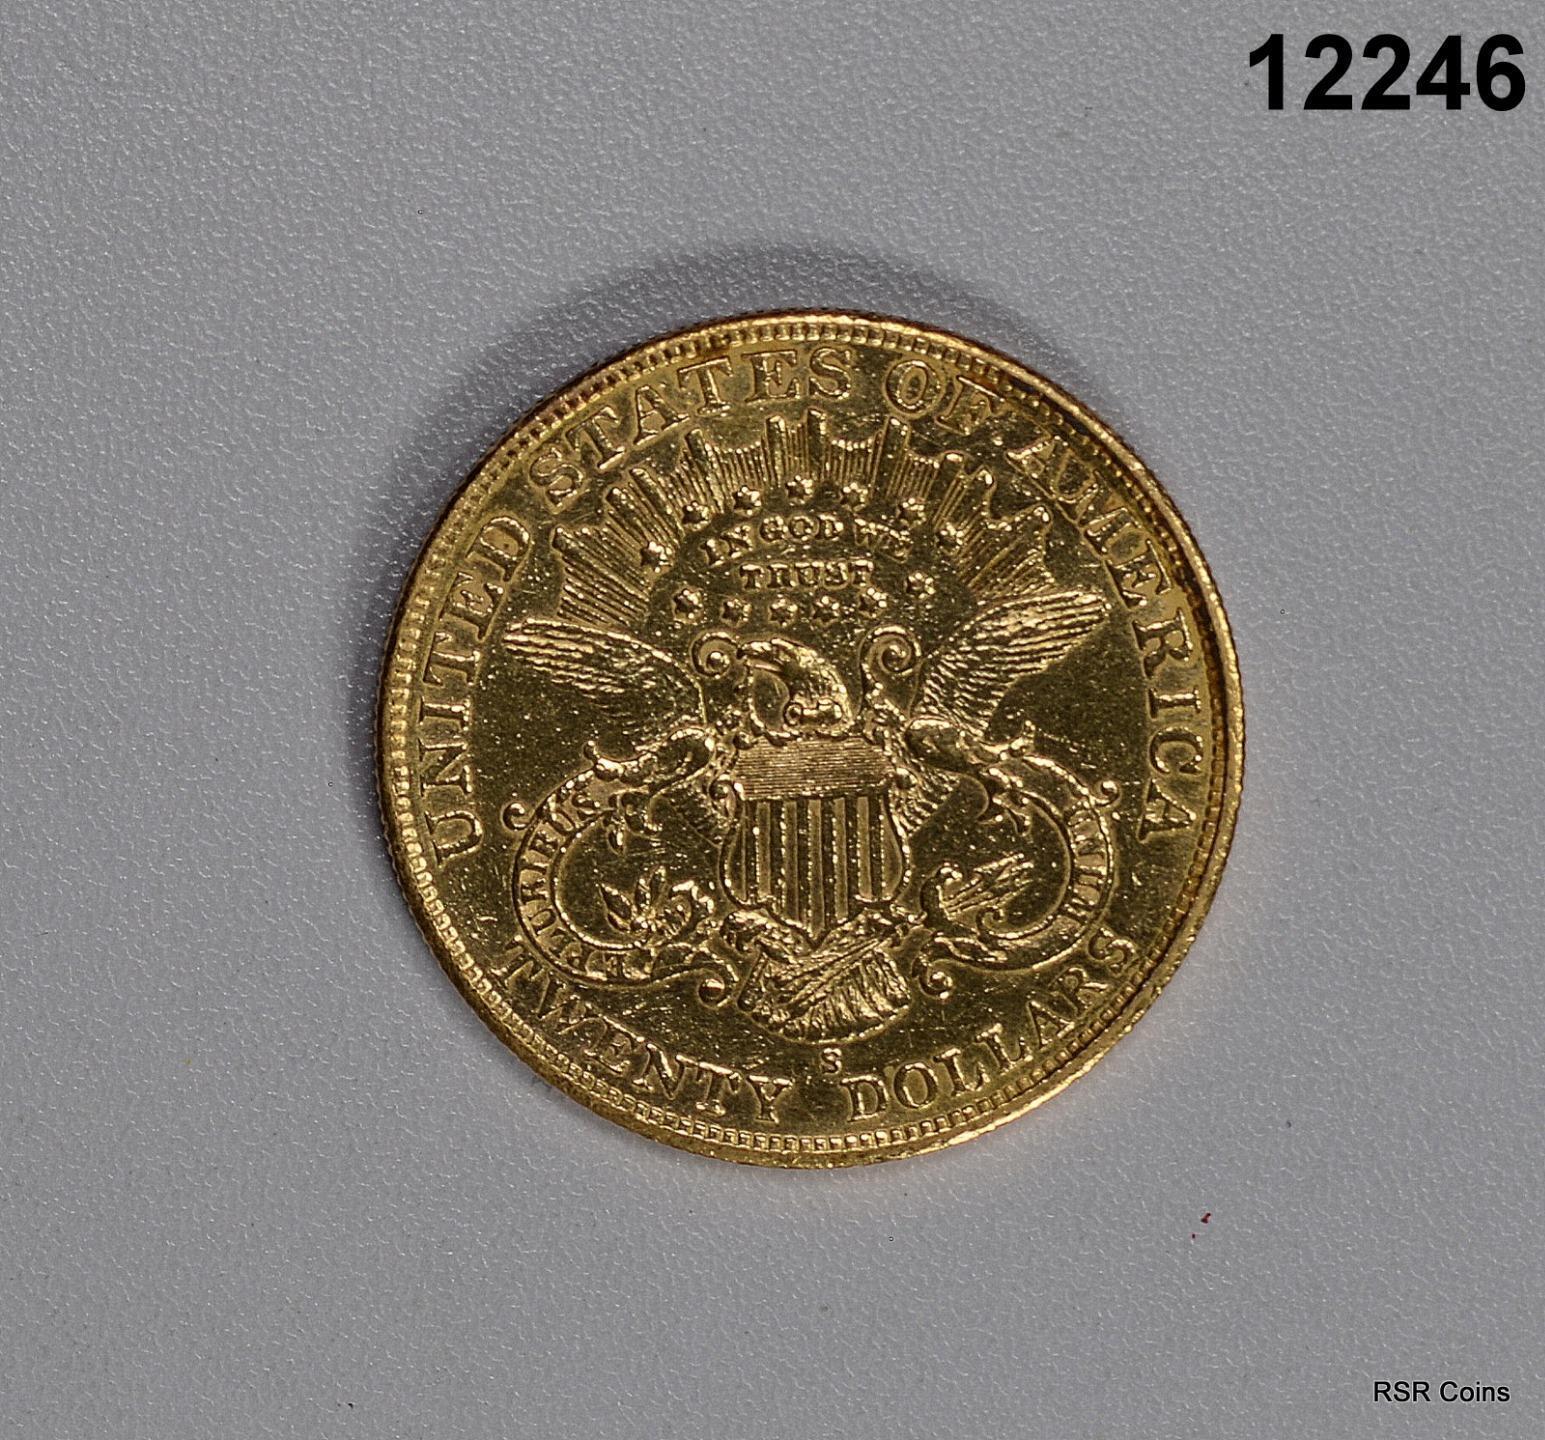 1901 S $20 GOLD LIBERTY #12246